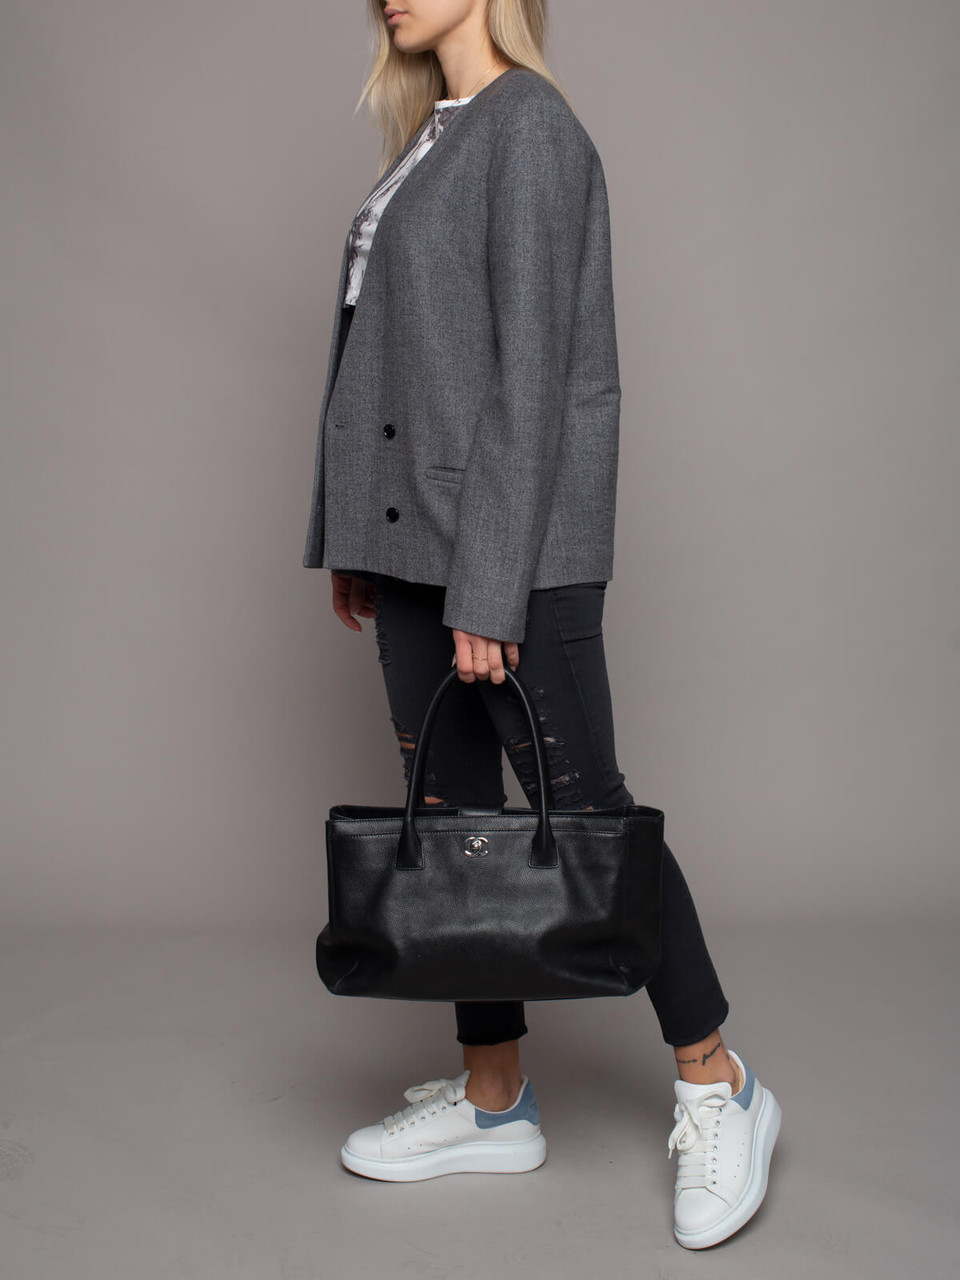 Joseph Women's Blazer, Size 12 UK, Grey Wool